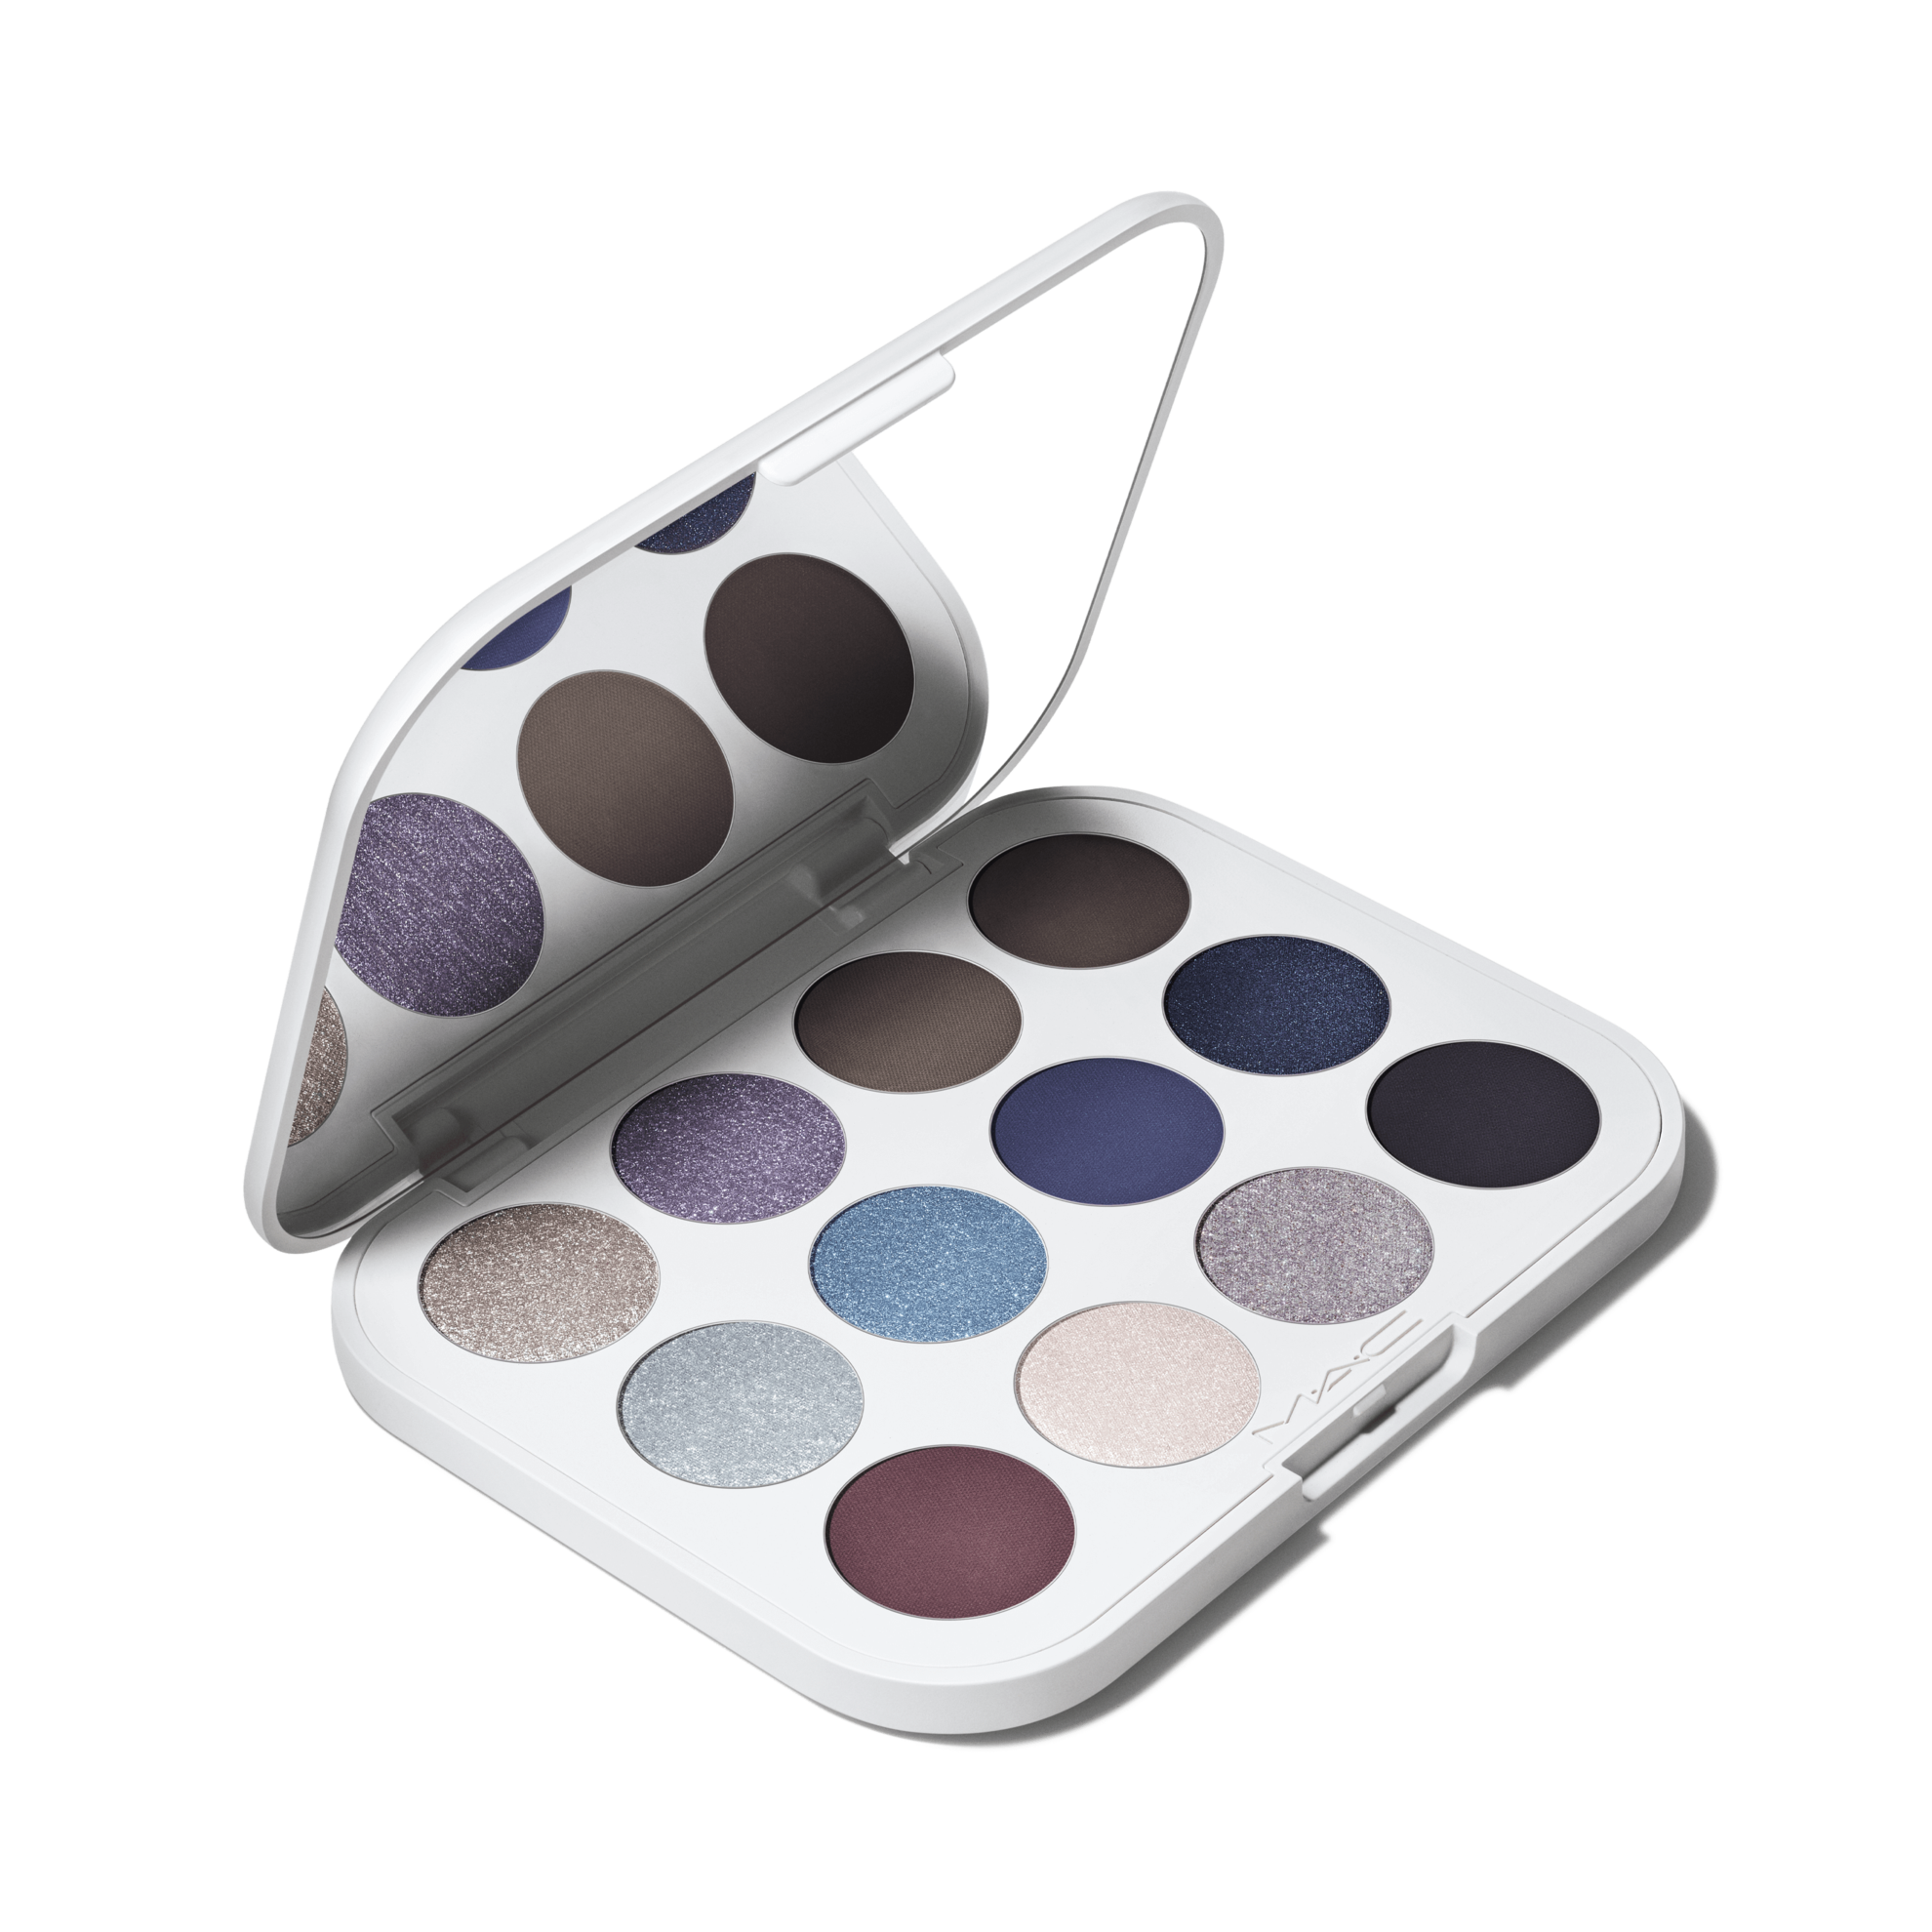 Oferta de Snowbody’s Business Eye Shadow Palette x 12 por $1394.1 en MAC Cosmetics